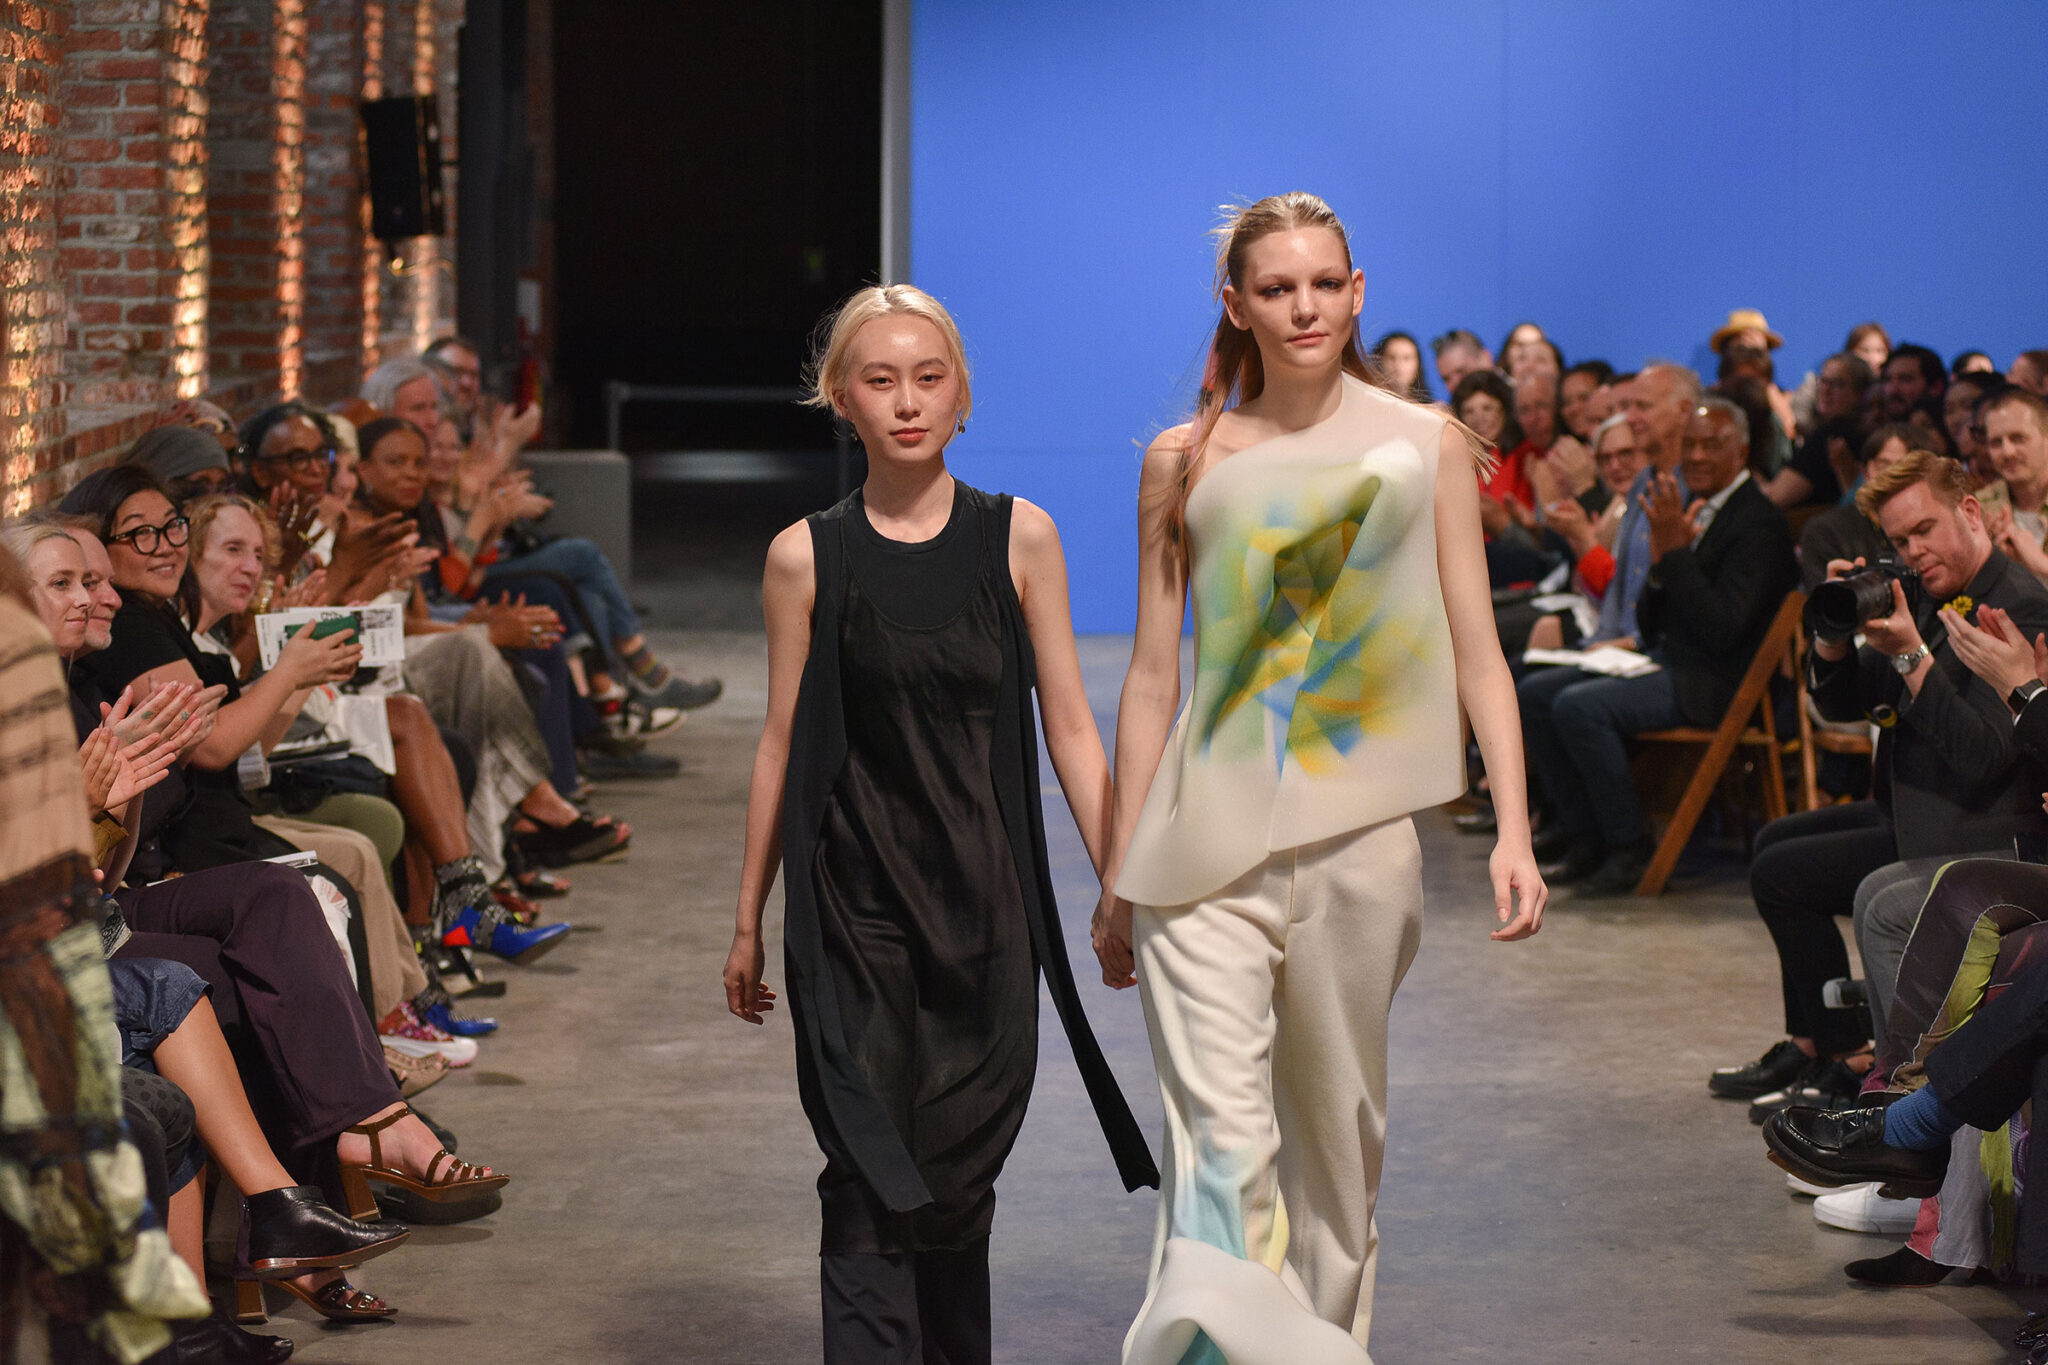 Pratt Fashion Wows Audience at Assemblage Runway Show Pratt Institute